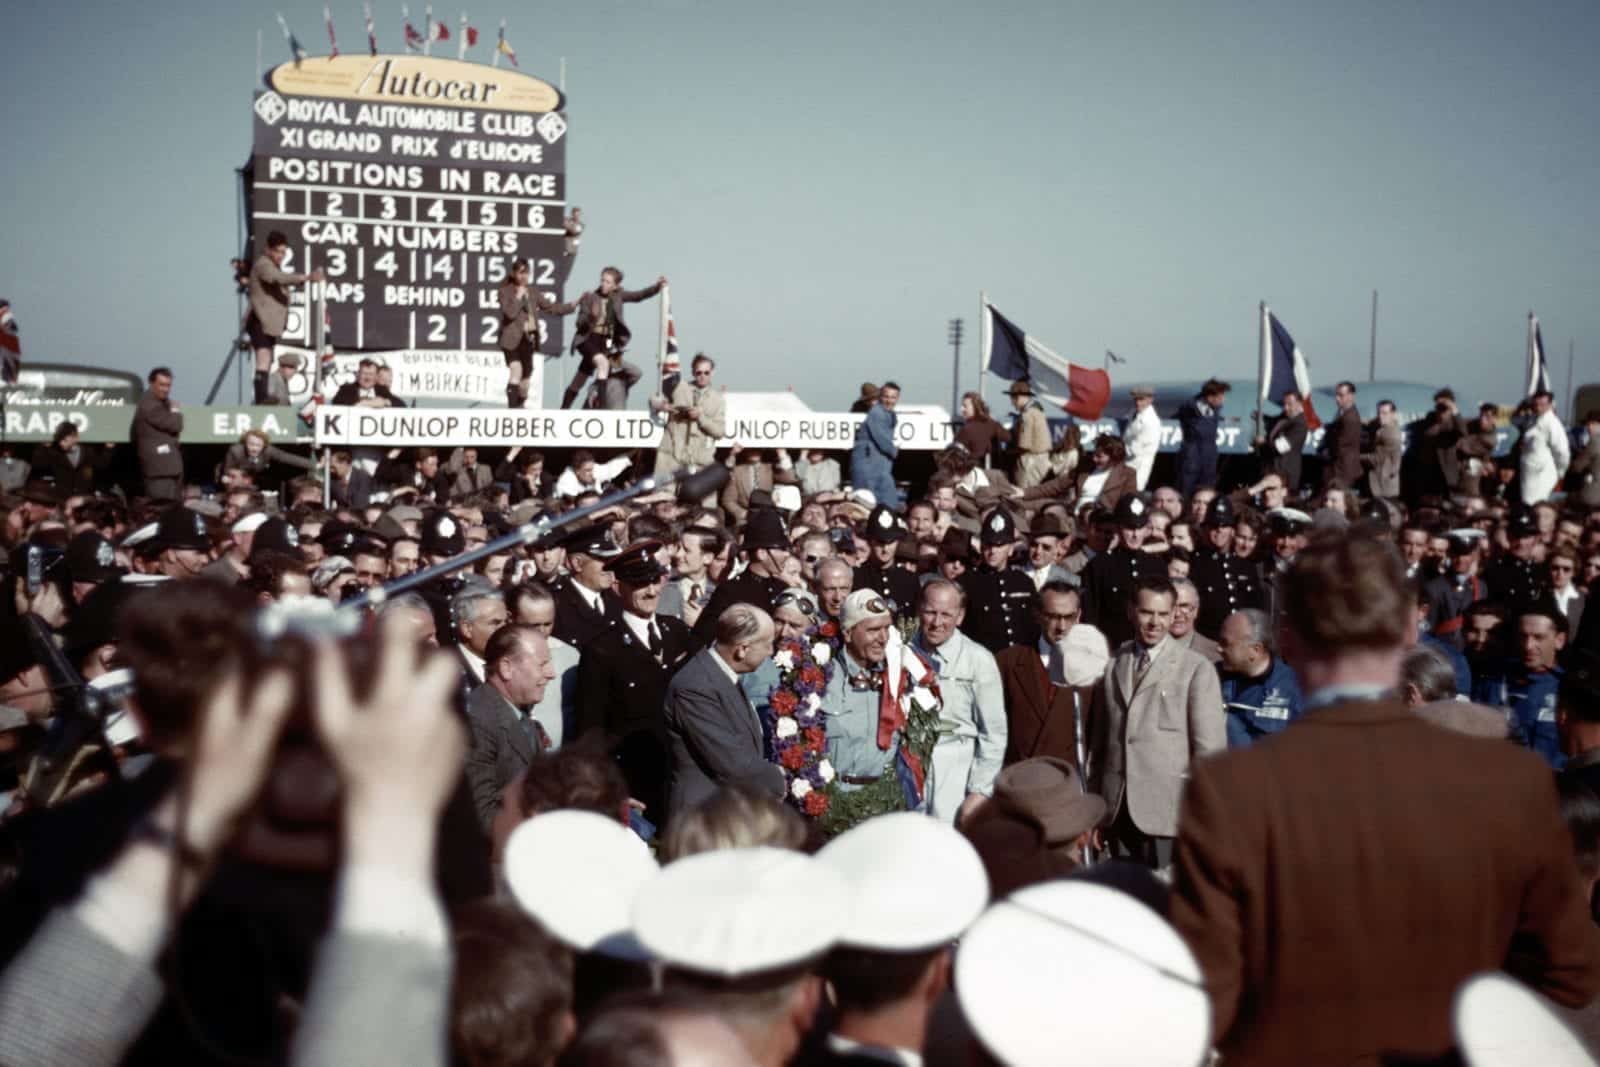 Crowds around Giuseppe Farina after the 1950 British Grand Prix